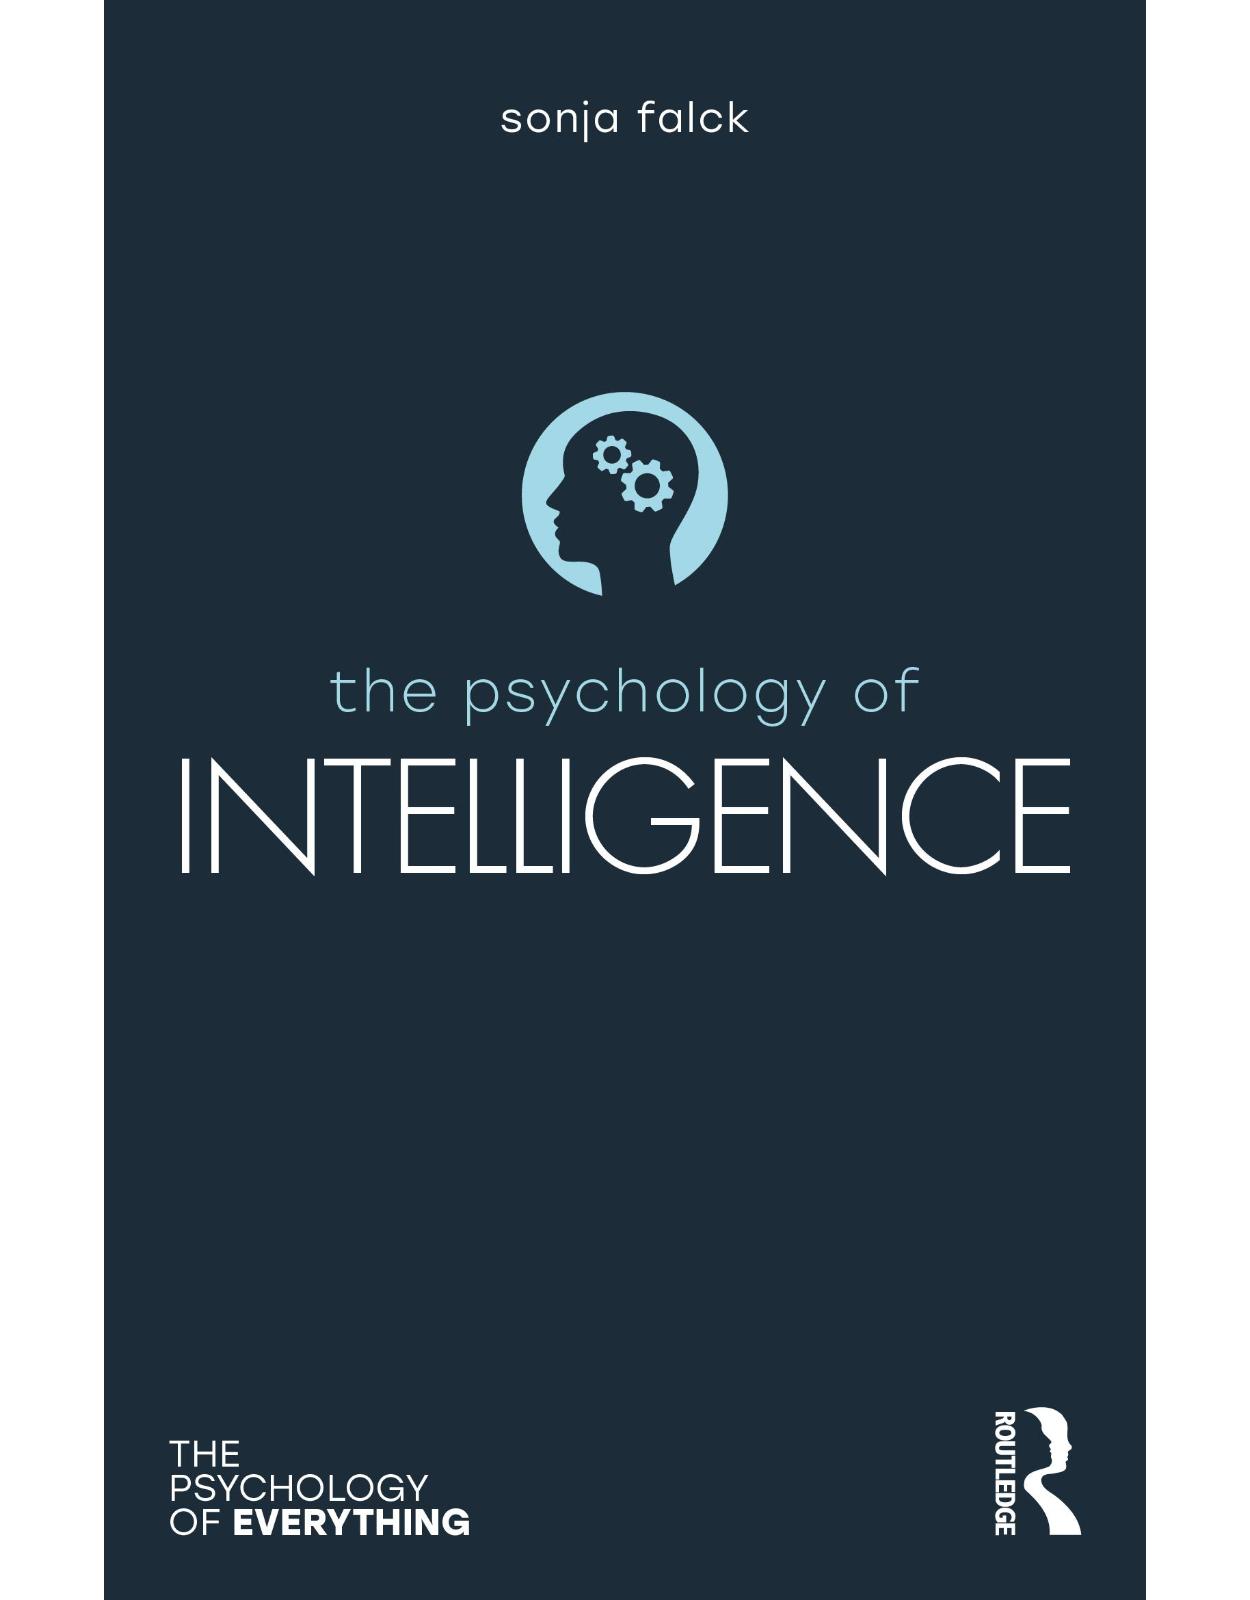 The Psychology of Intelligence (The Psychology of Everything)